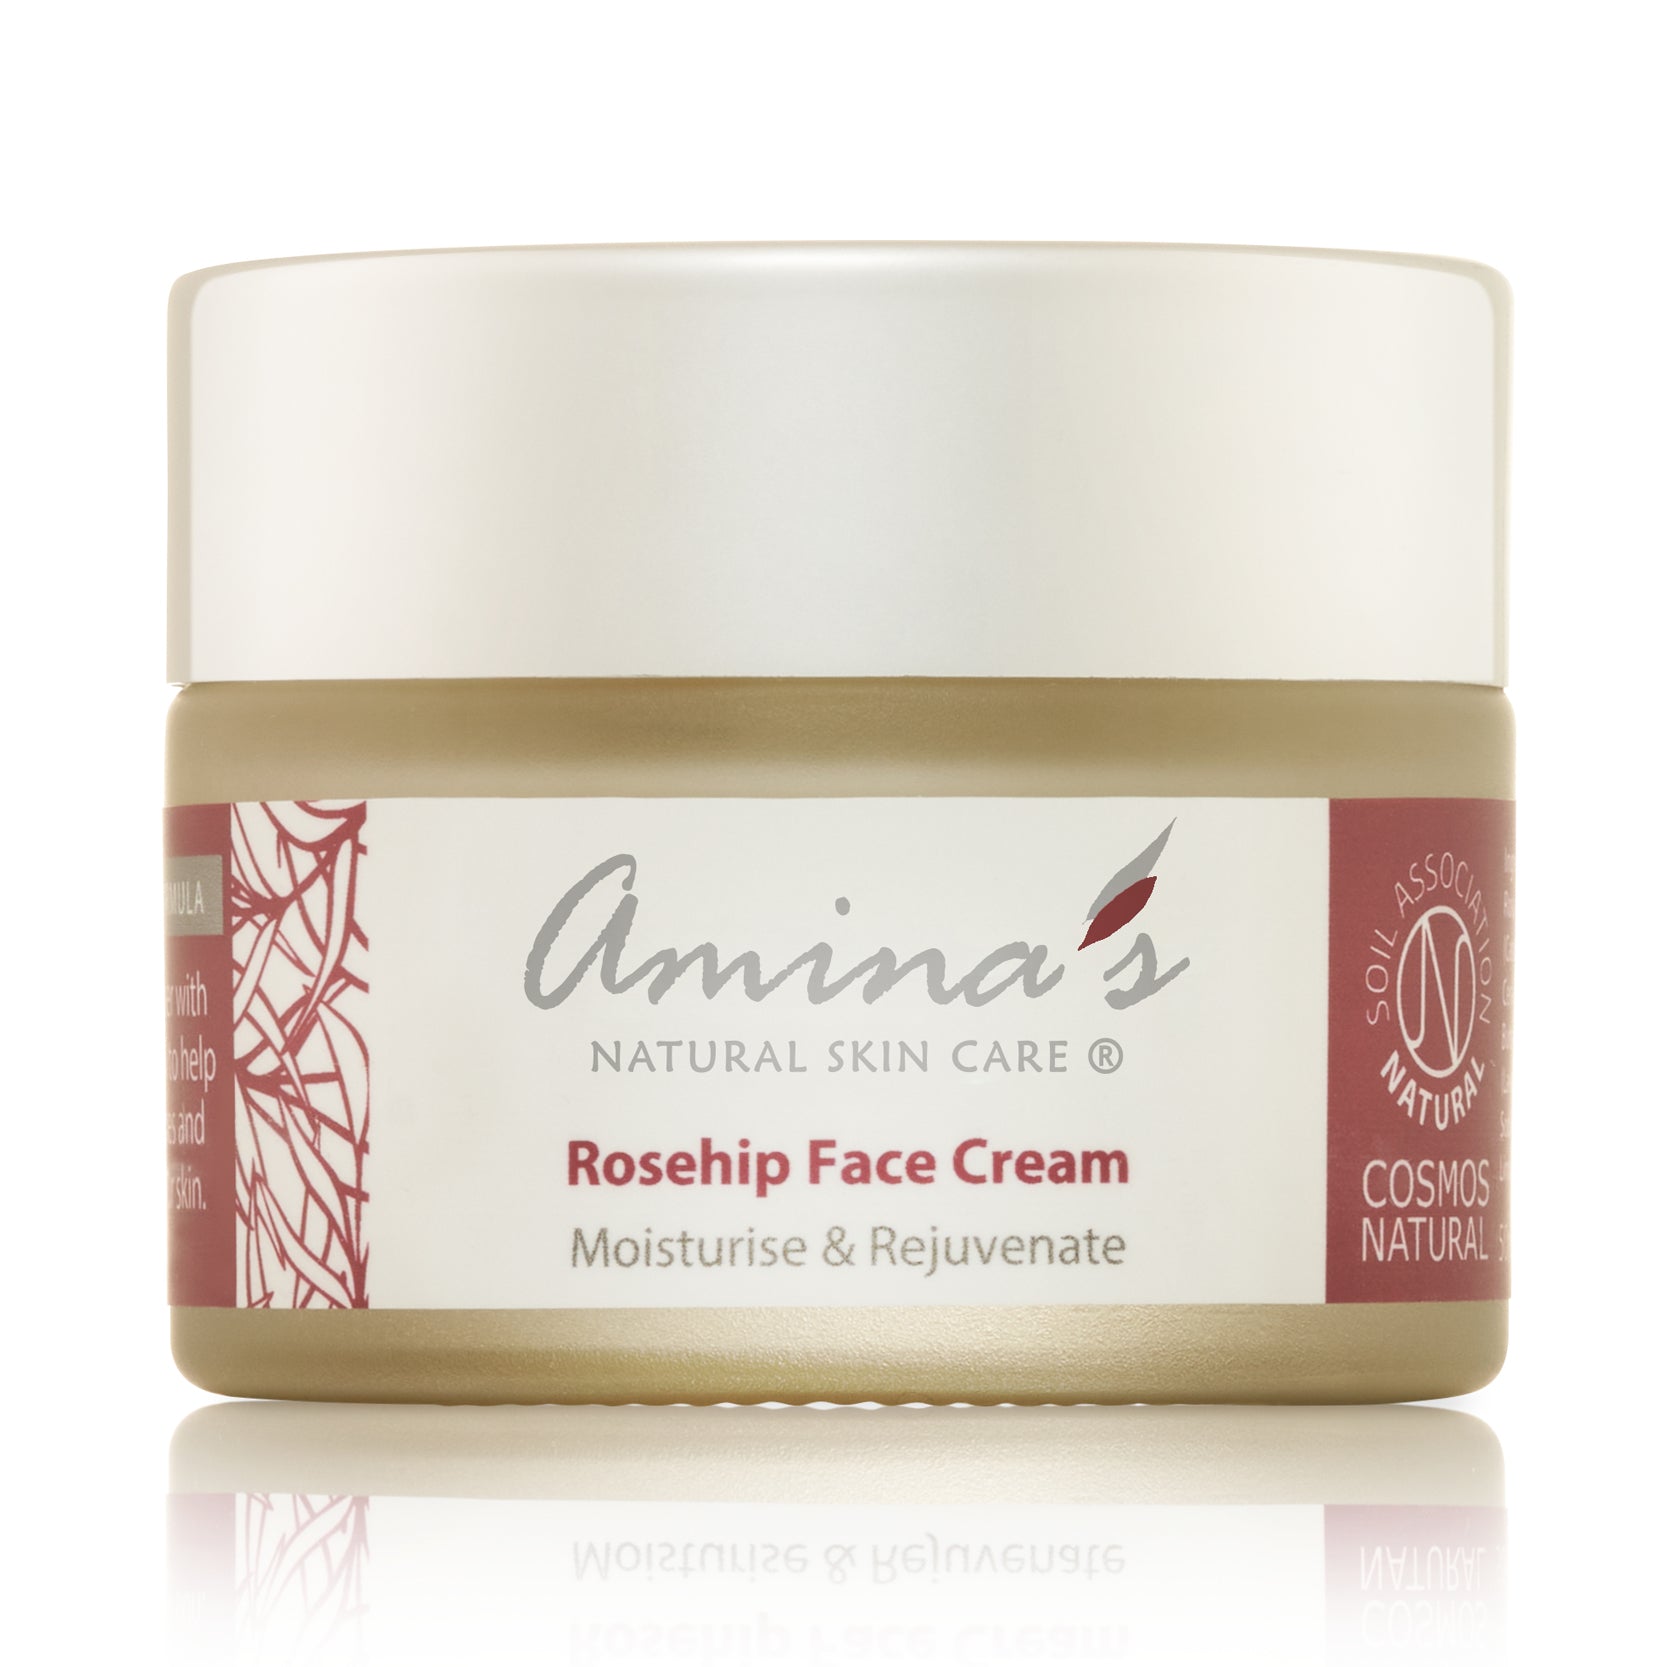 Amina's Organic Rosehip Face Cream 50ml - BambiniJO | Buy Online | Jordan